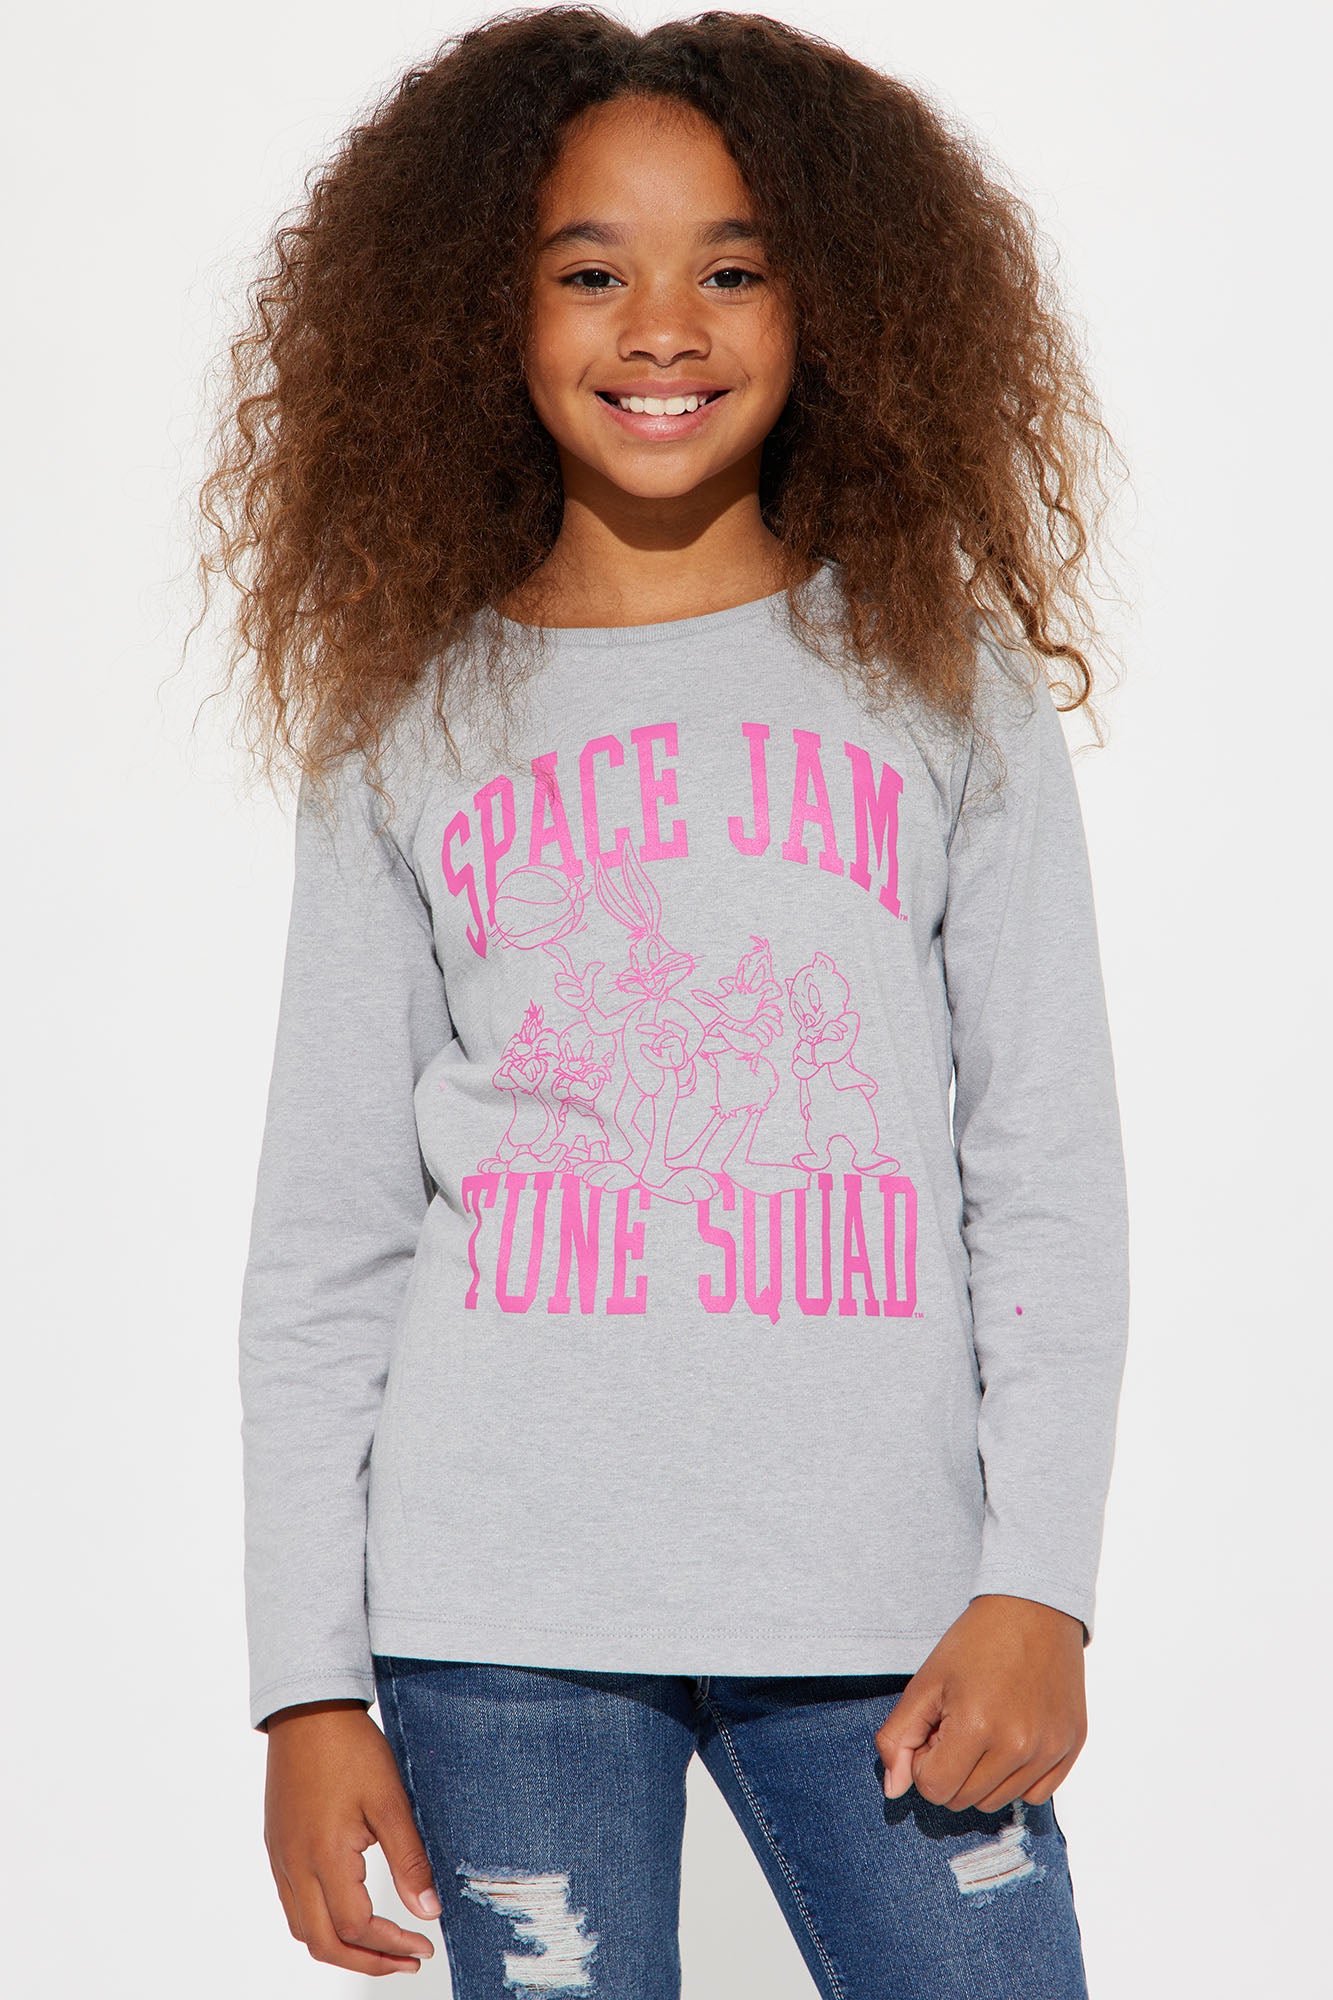 Mini Space Jam Tune Squad - | Kids Nova T-Shirts Fashion Tops & Grey | Sleeve Long Nova, Fashion Tee